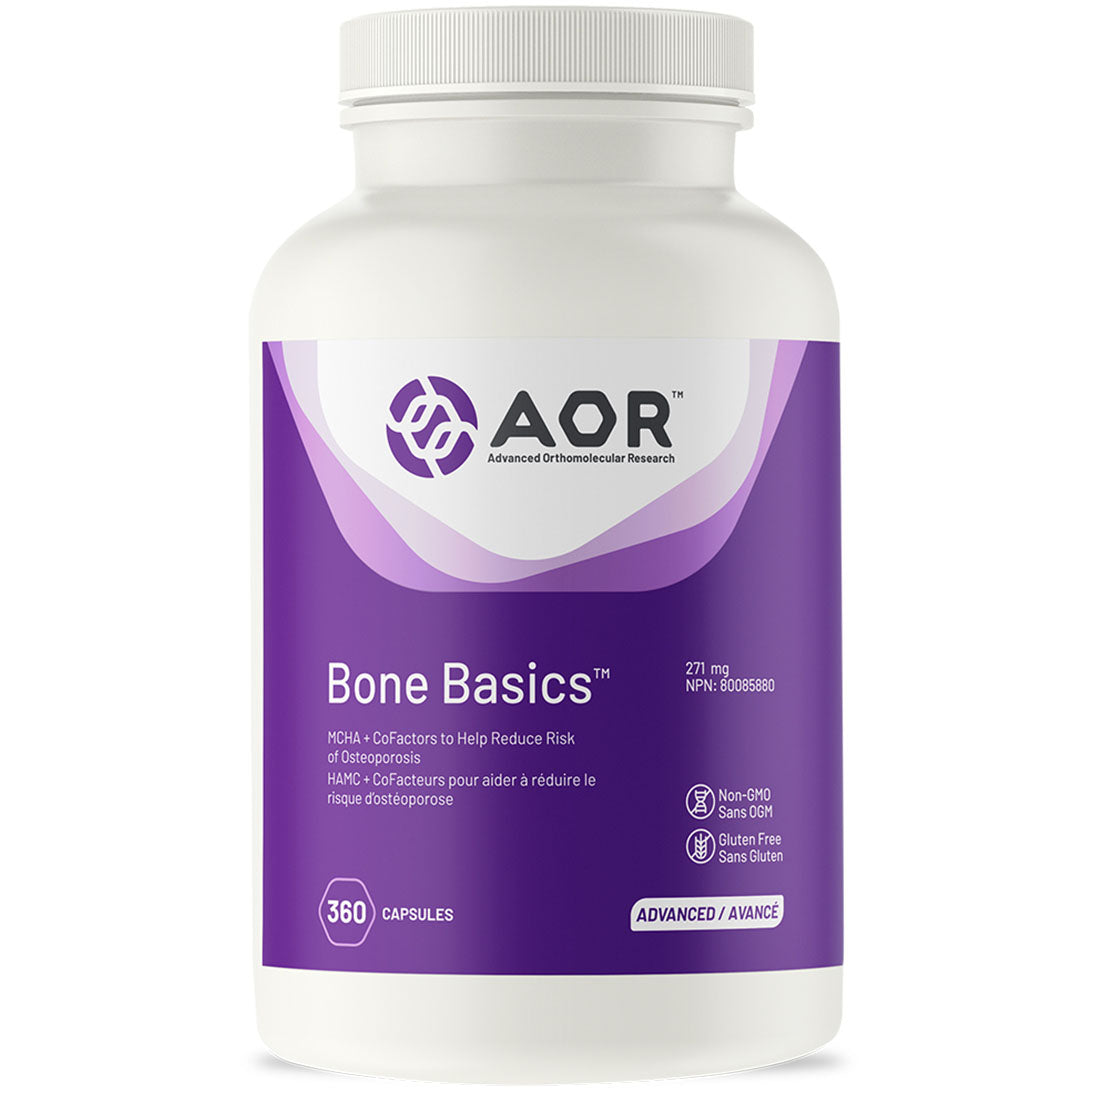 AOR Bone Basics 271mg, Osteoporosis Support